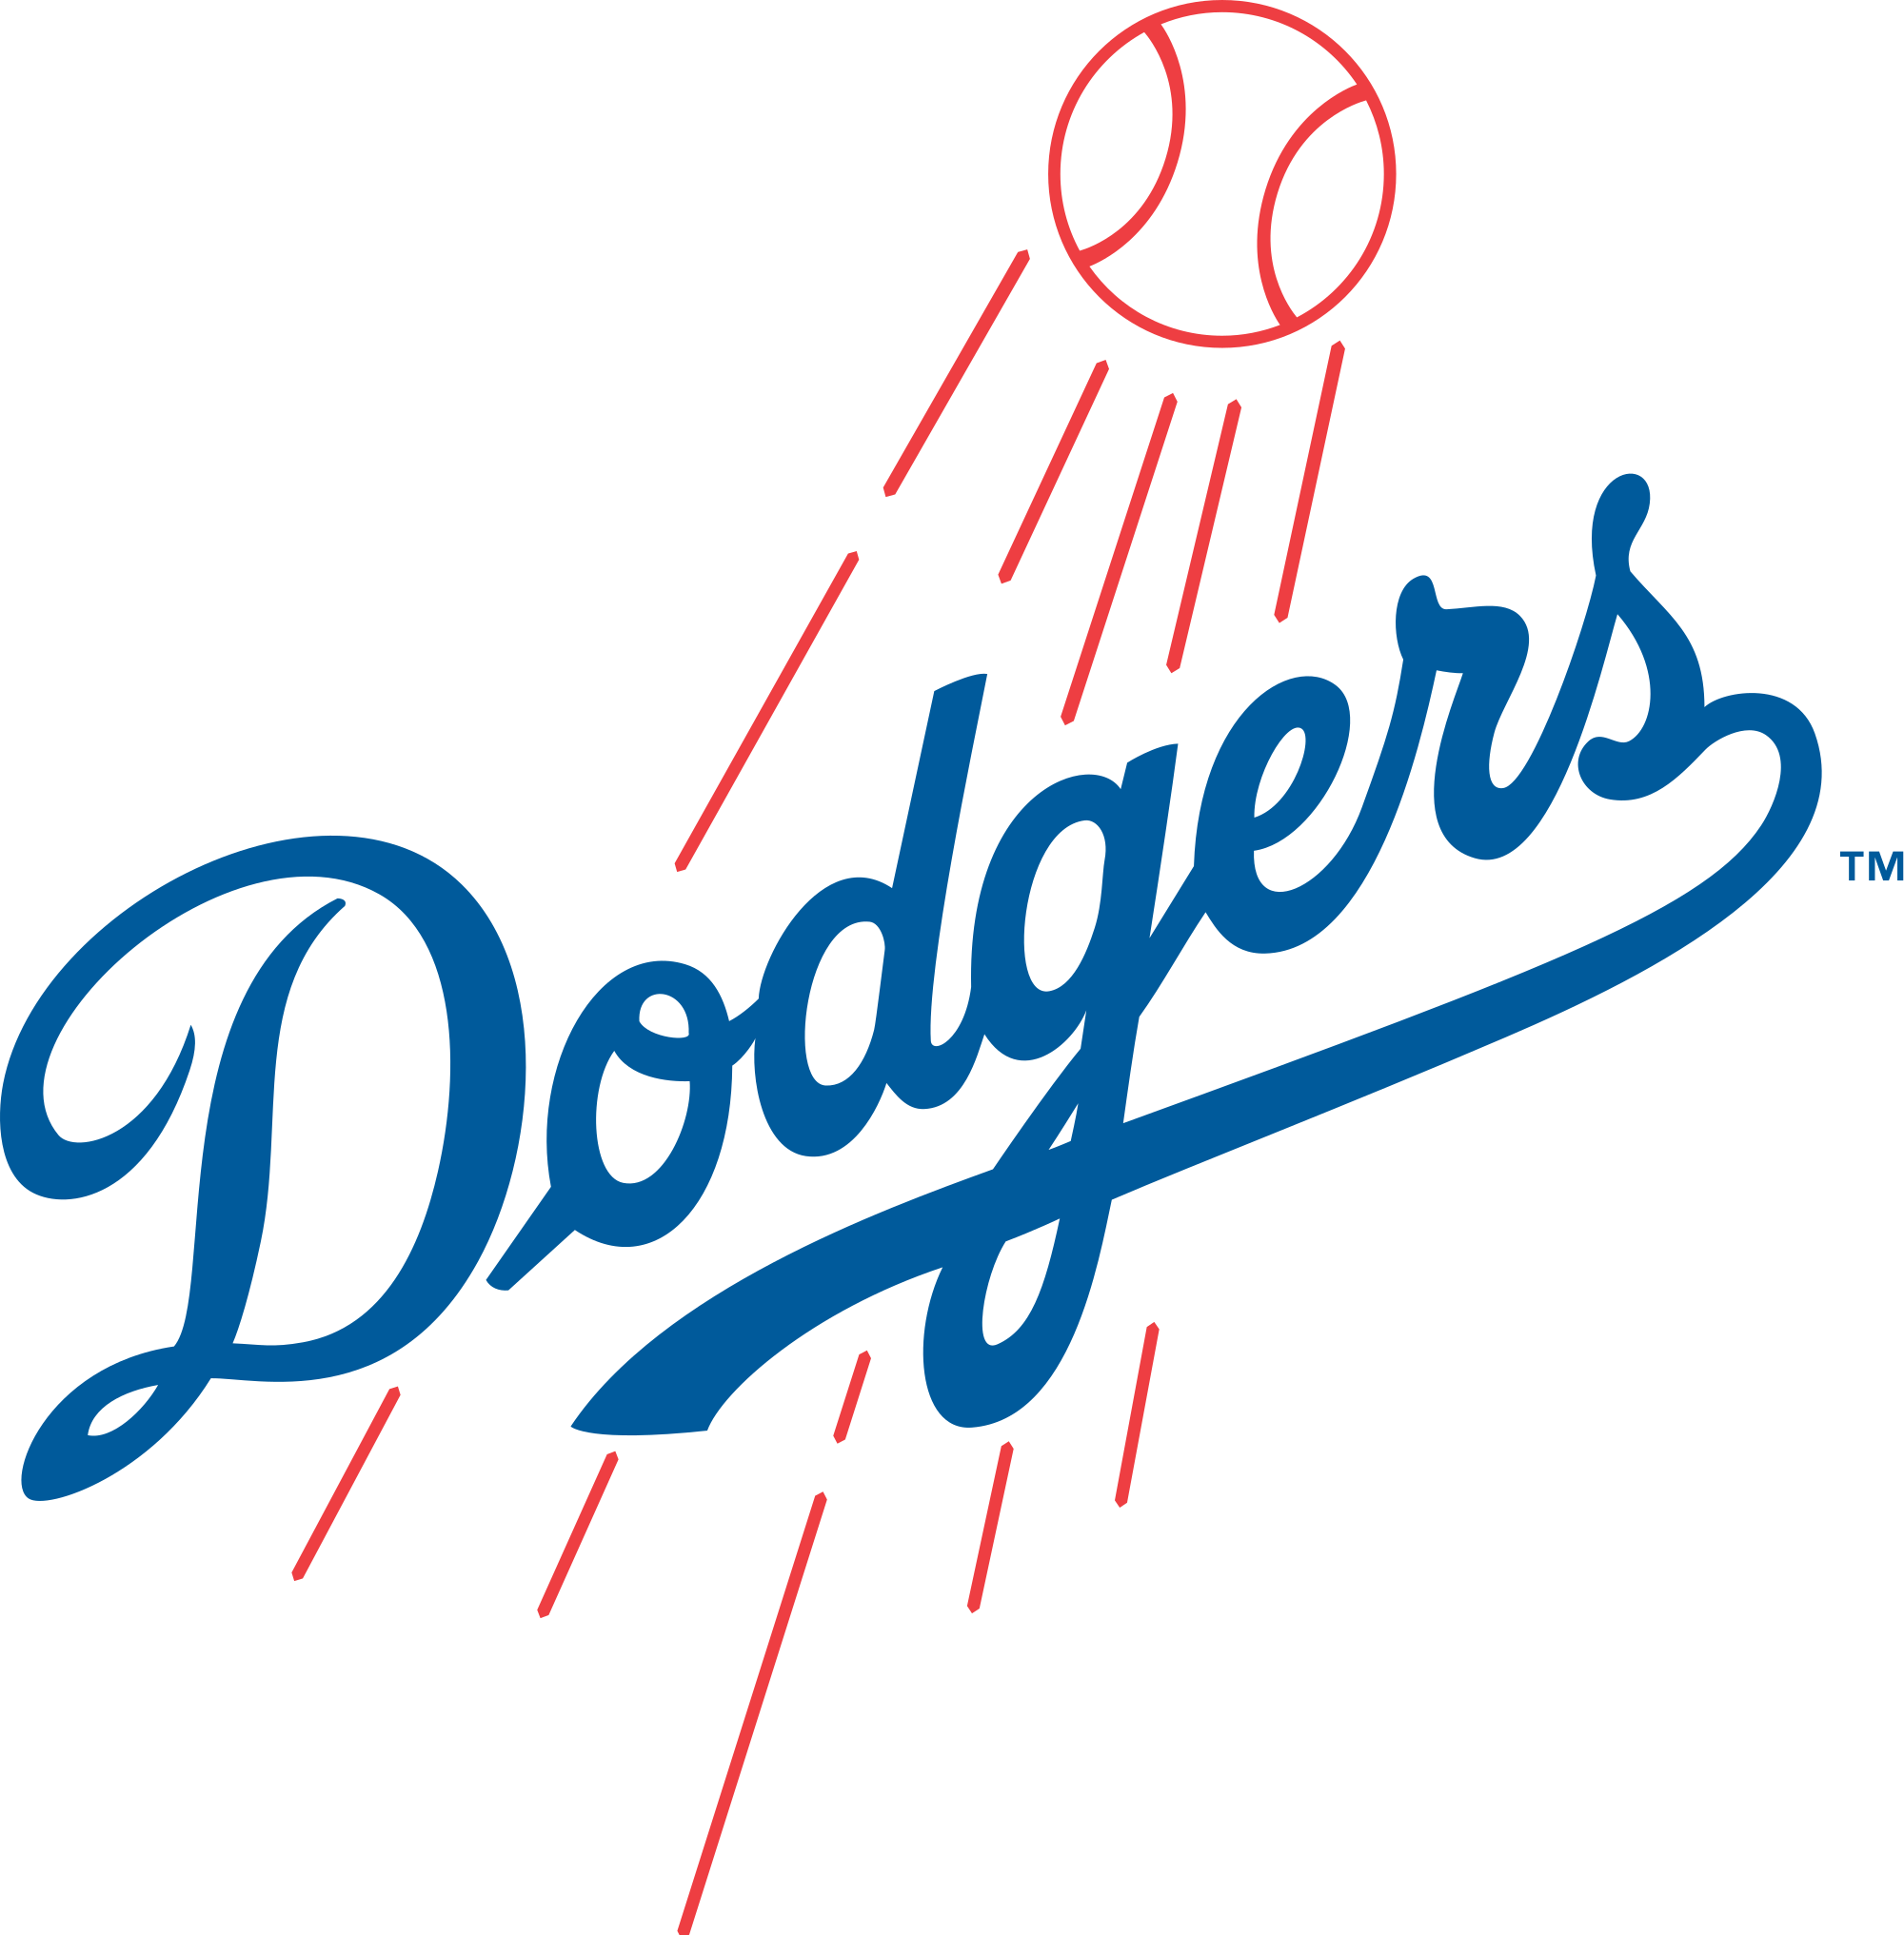 General 2000x2033 Los Angeles Dodgers Dodgers logo